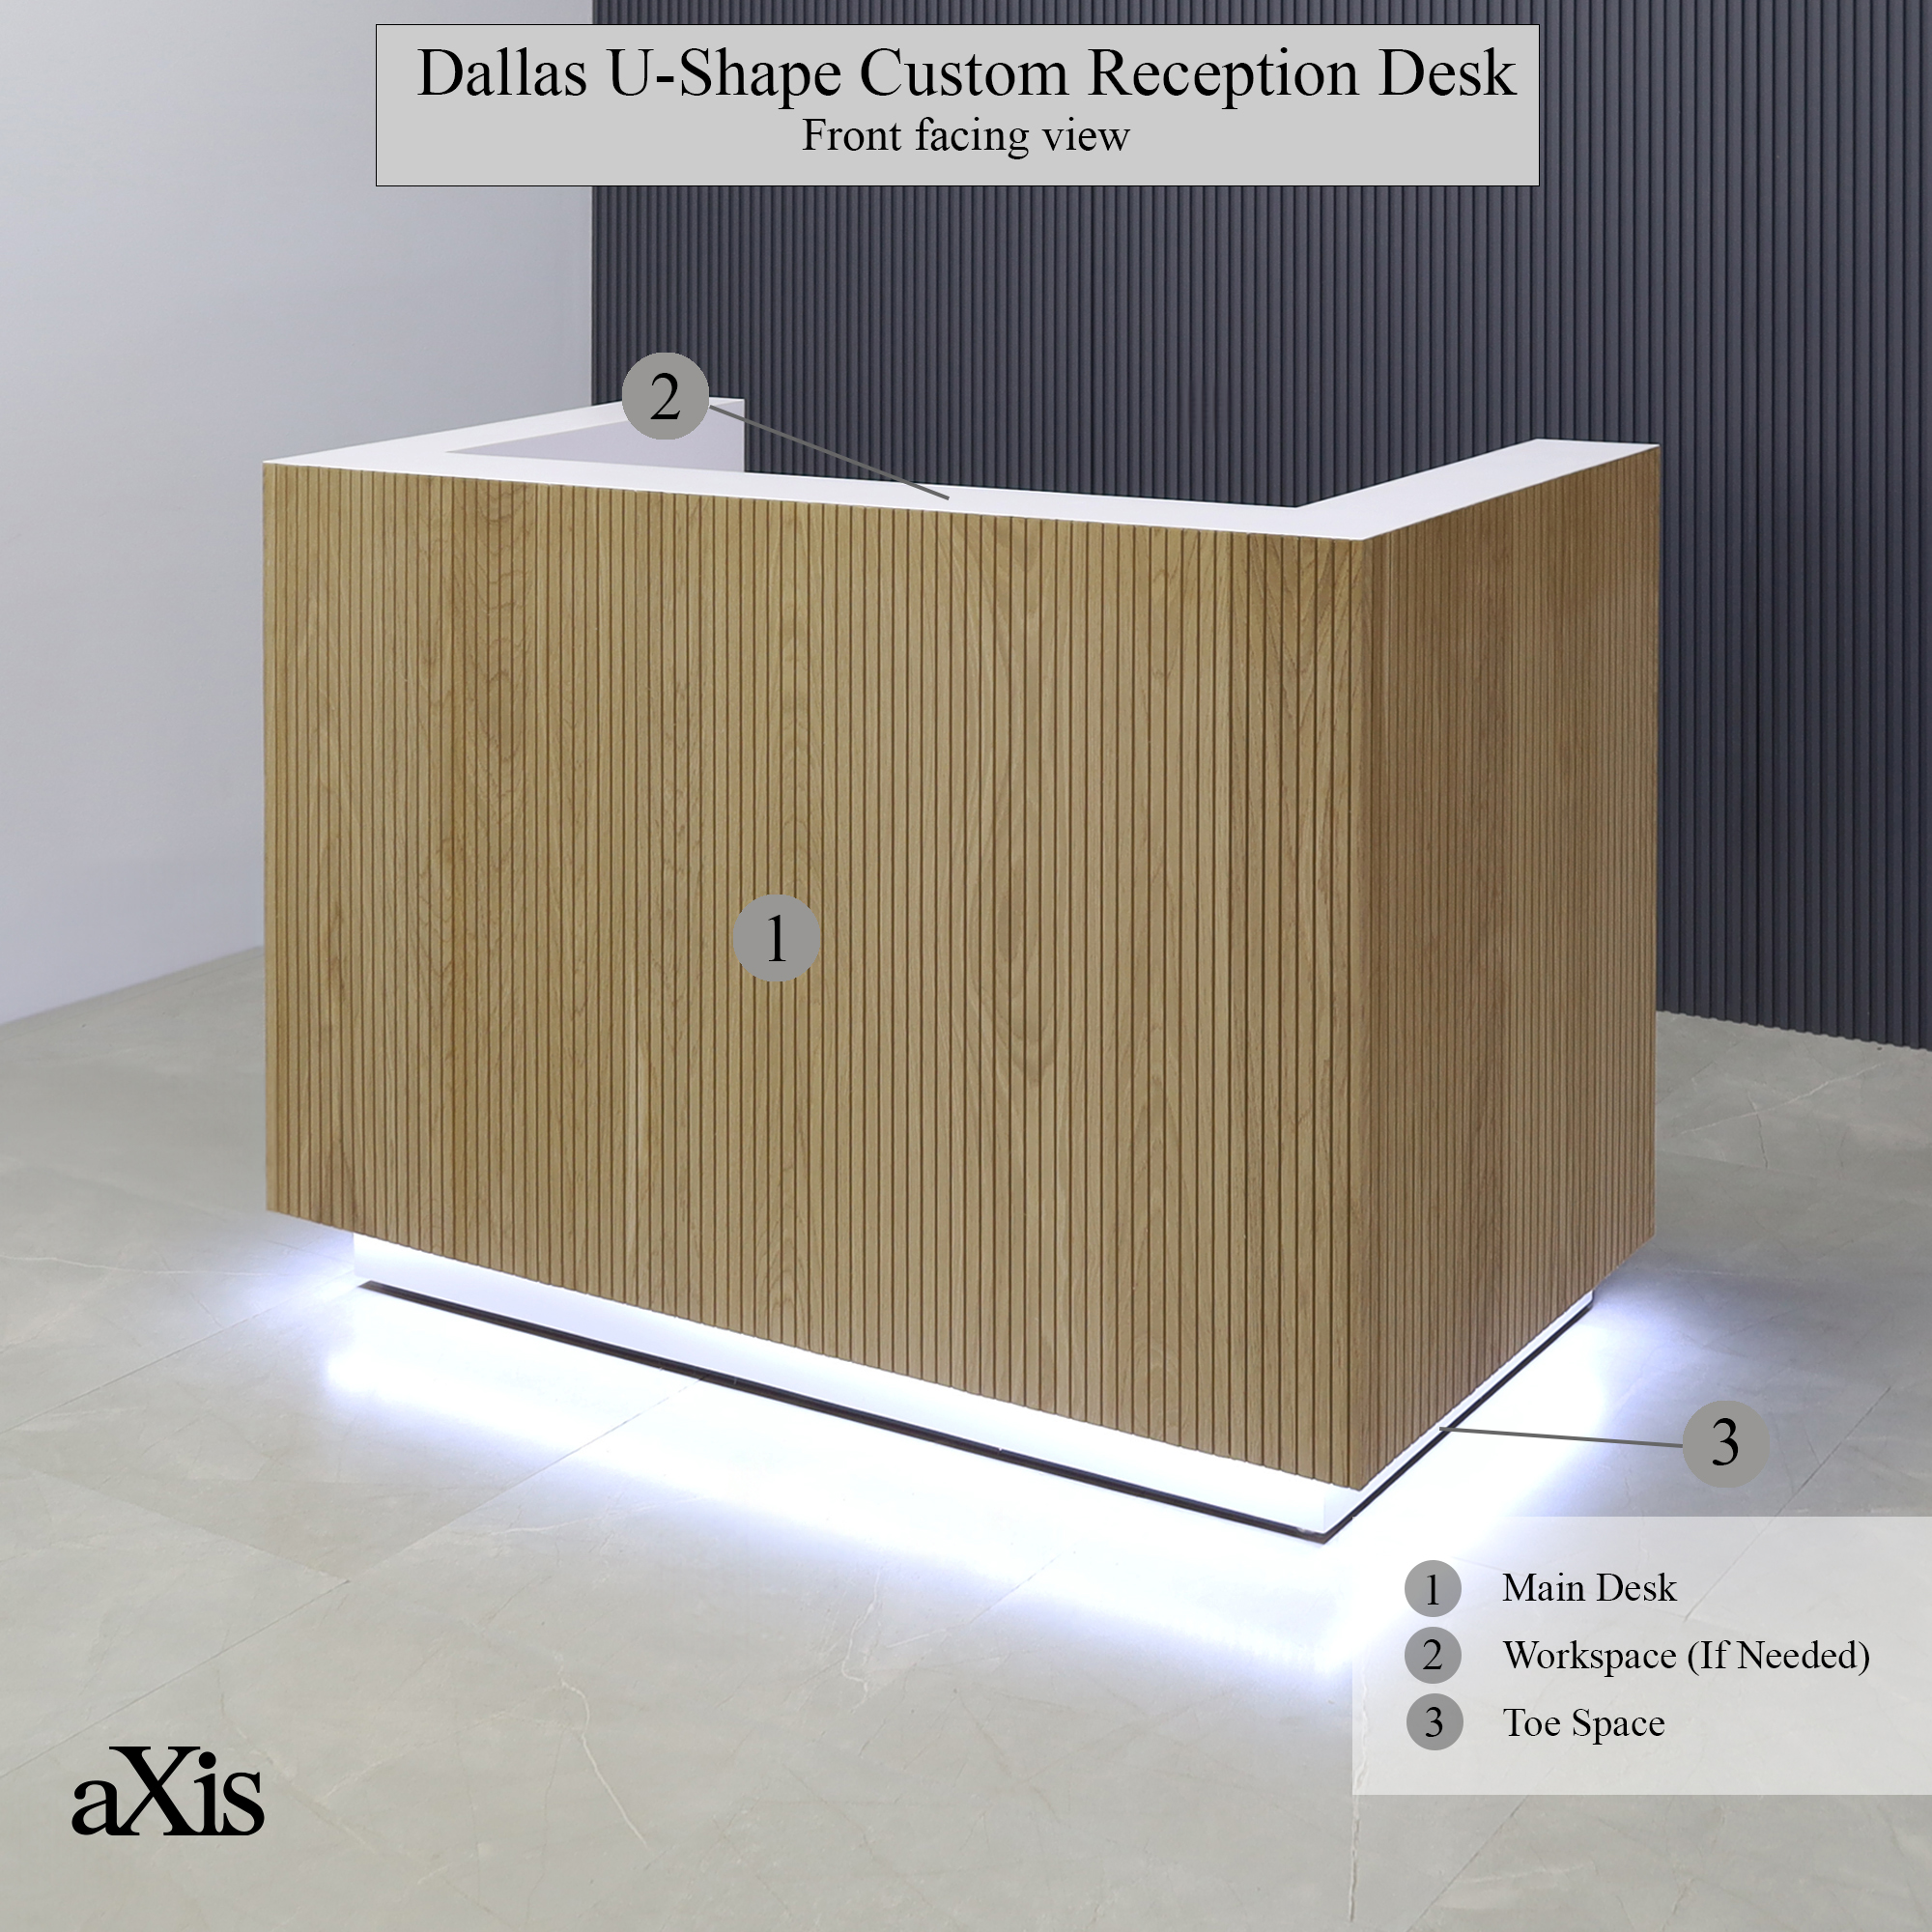 Dallas U-Shape Custom Reception Desk in white oak tambour main desk, white matte workspace and brushed aluminum toe-kick, with white LED shown here.